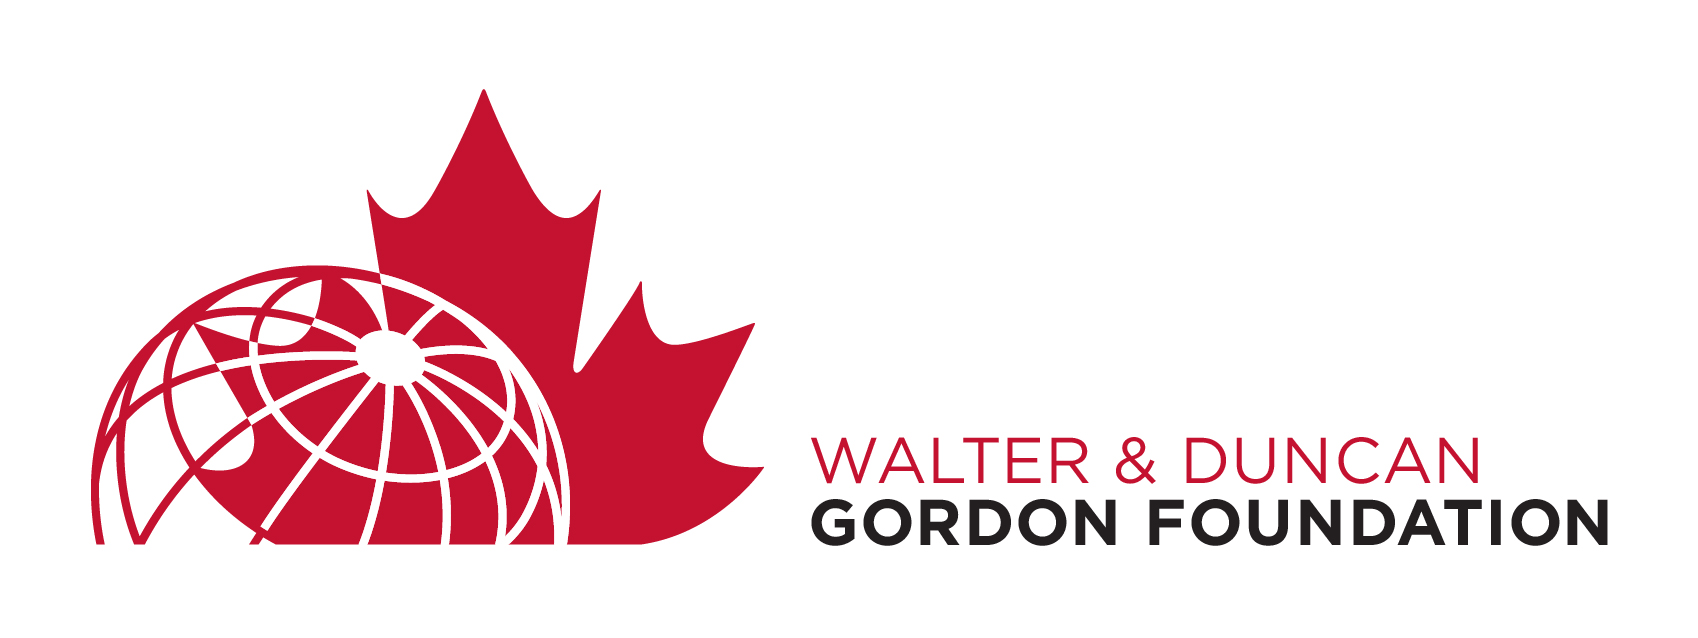 Walter & Duncan Gordon Foundation Logo